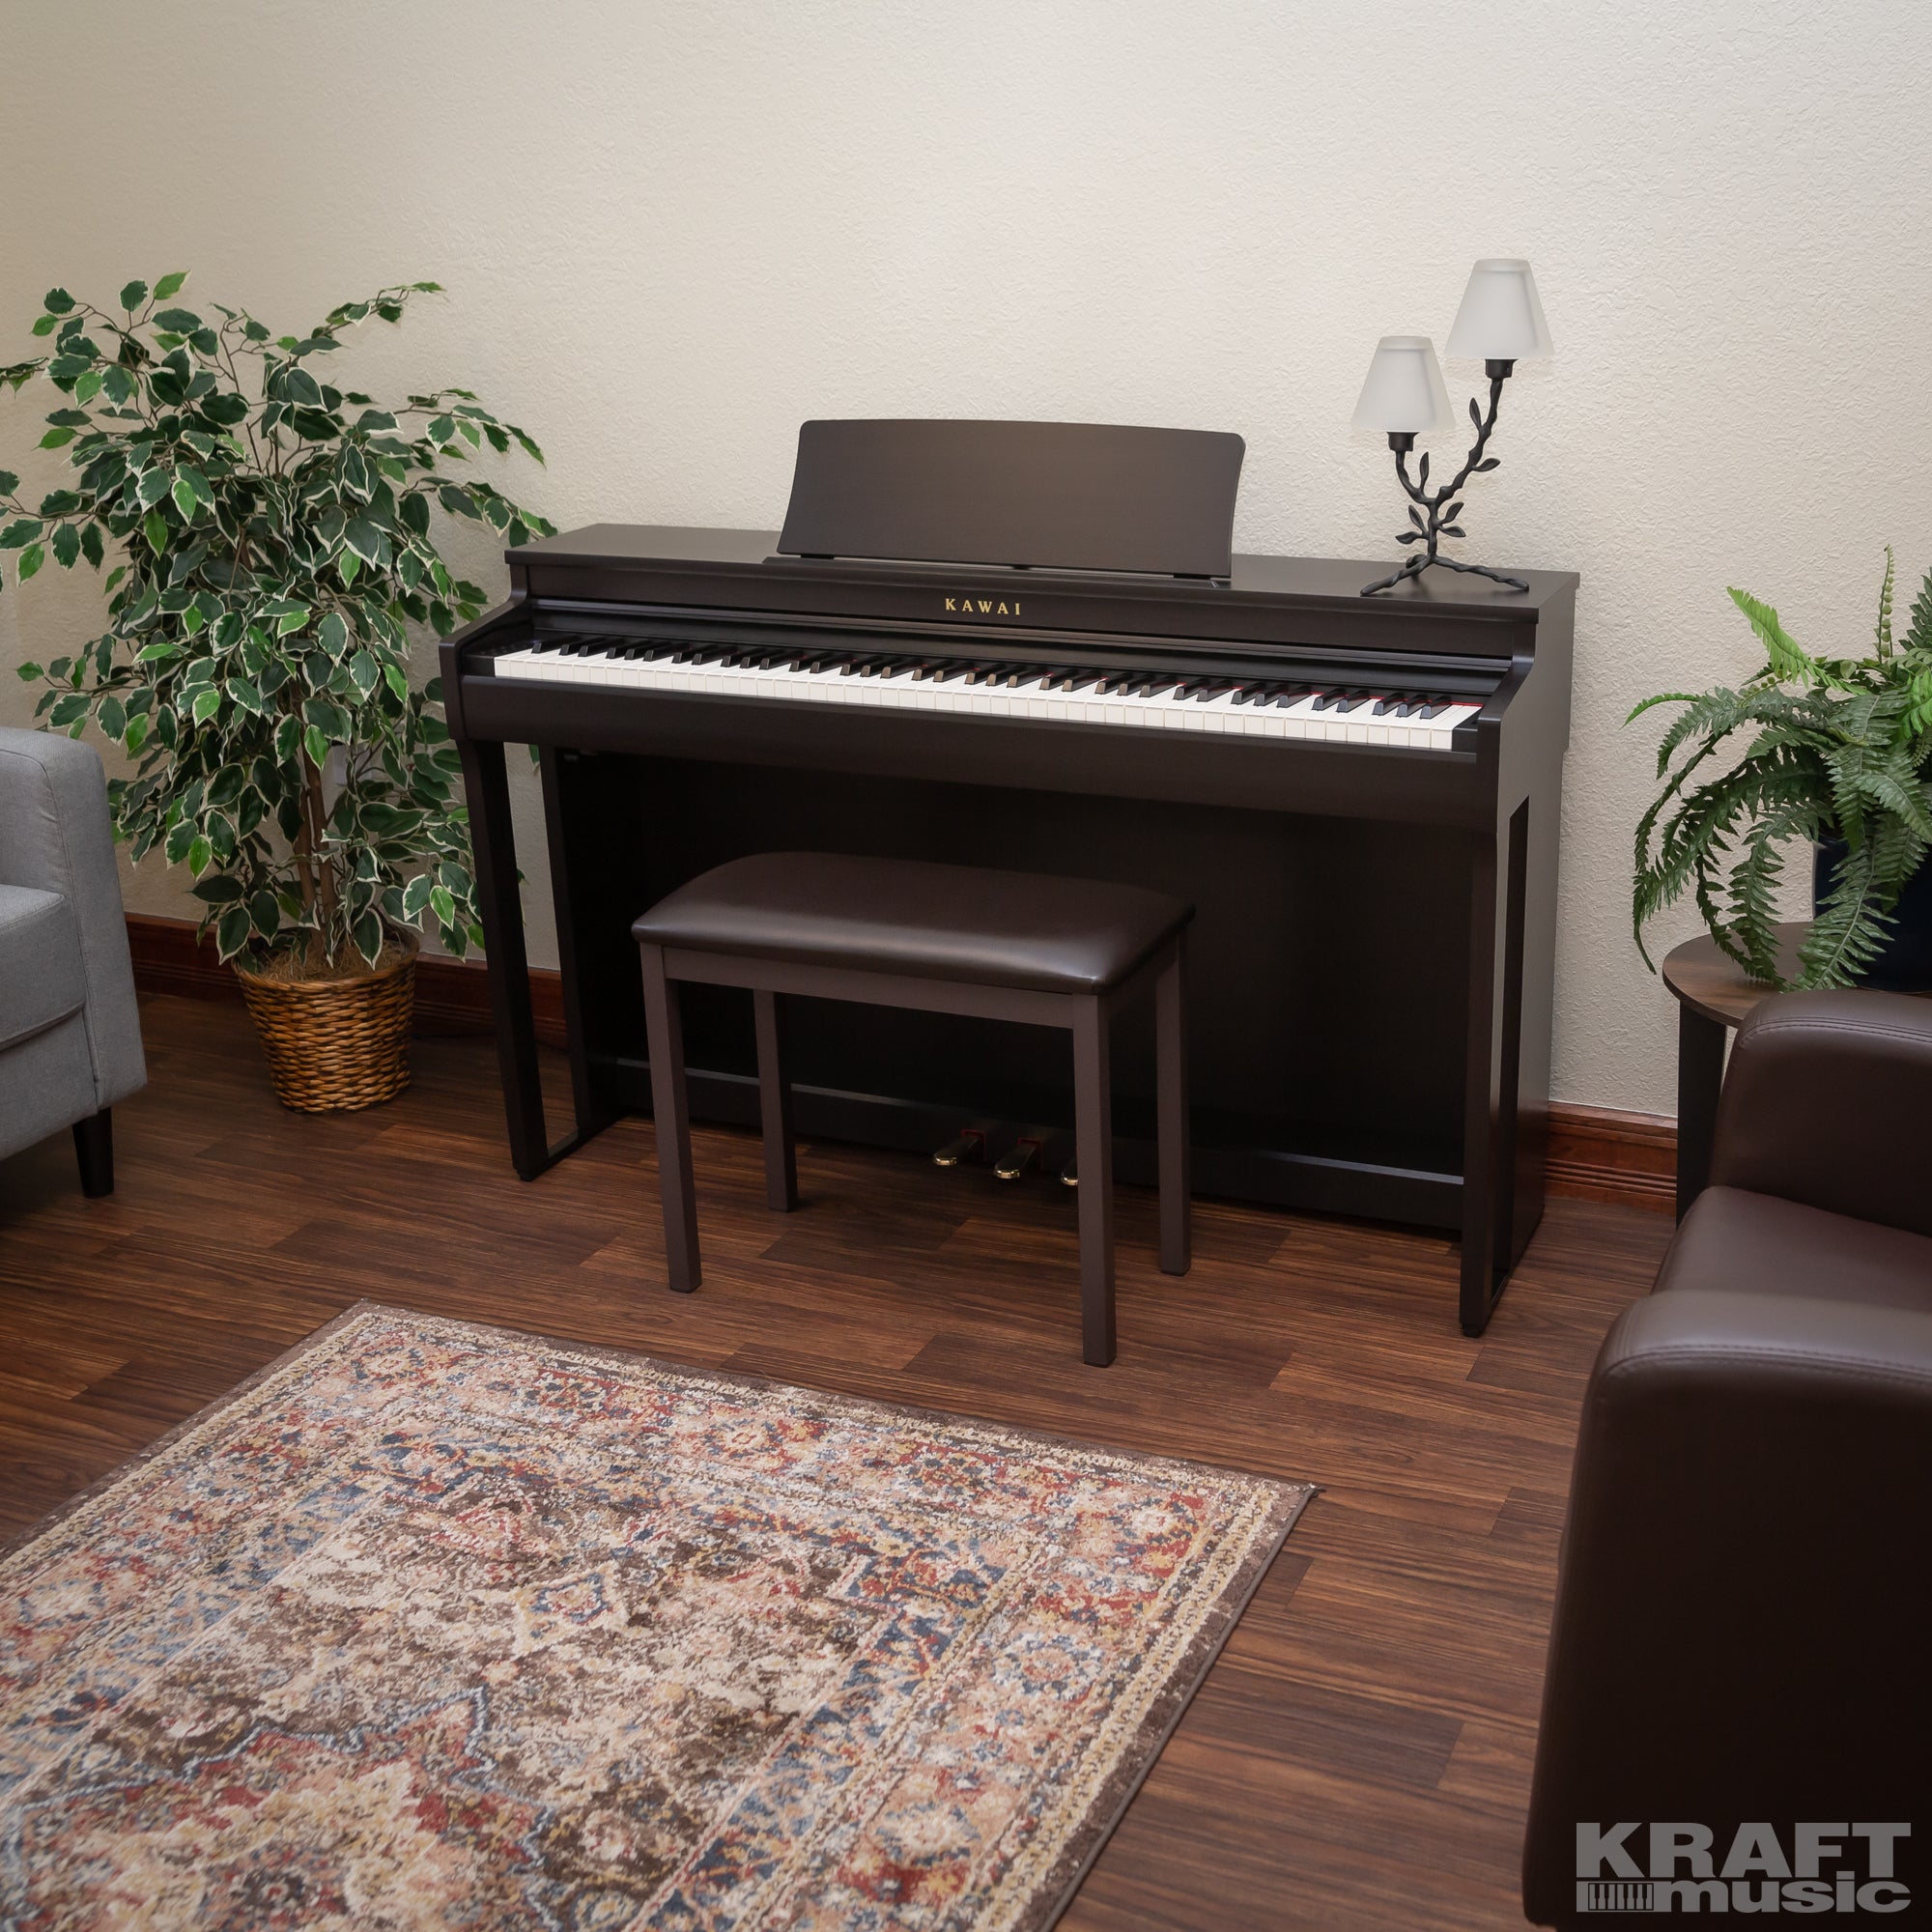 Kawai CN201 Digital Piano - Premium Rosewood - Left angle in a stylish living room